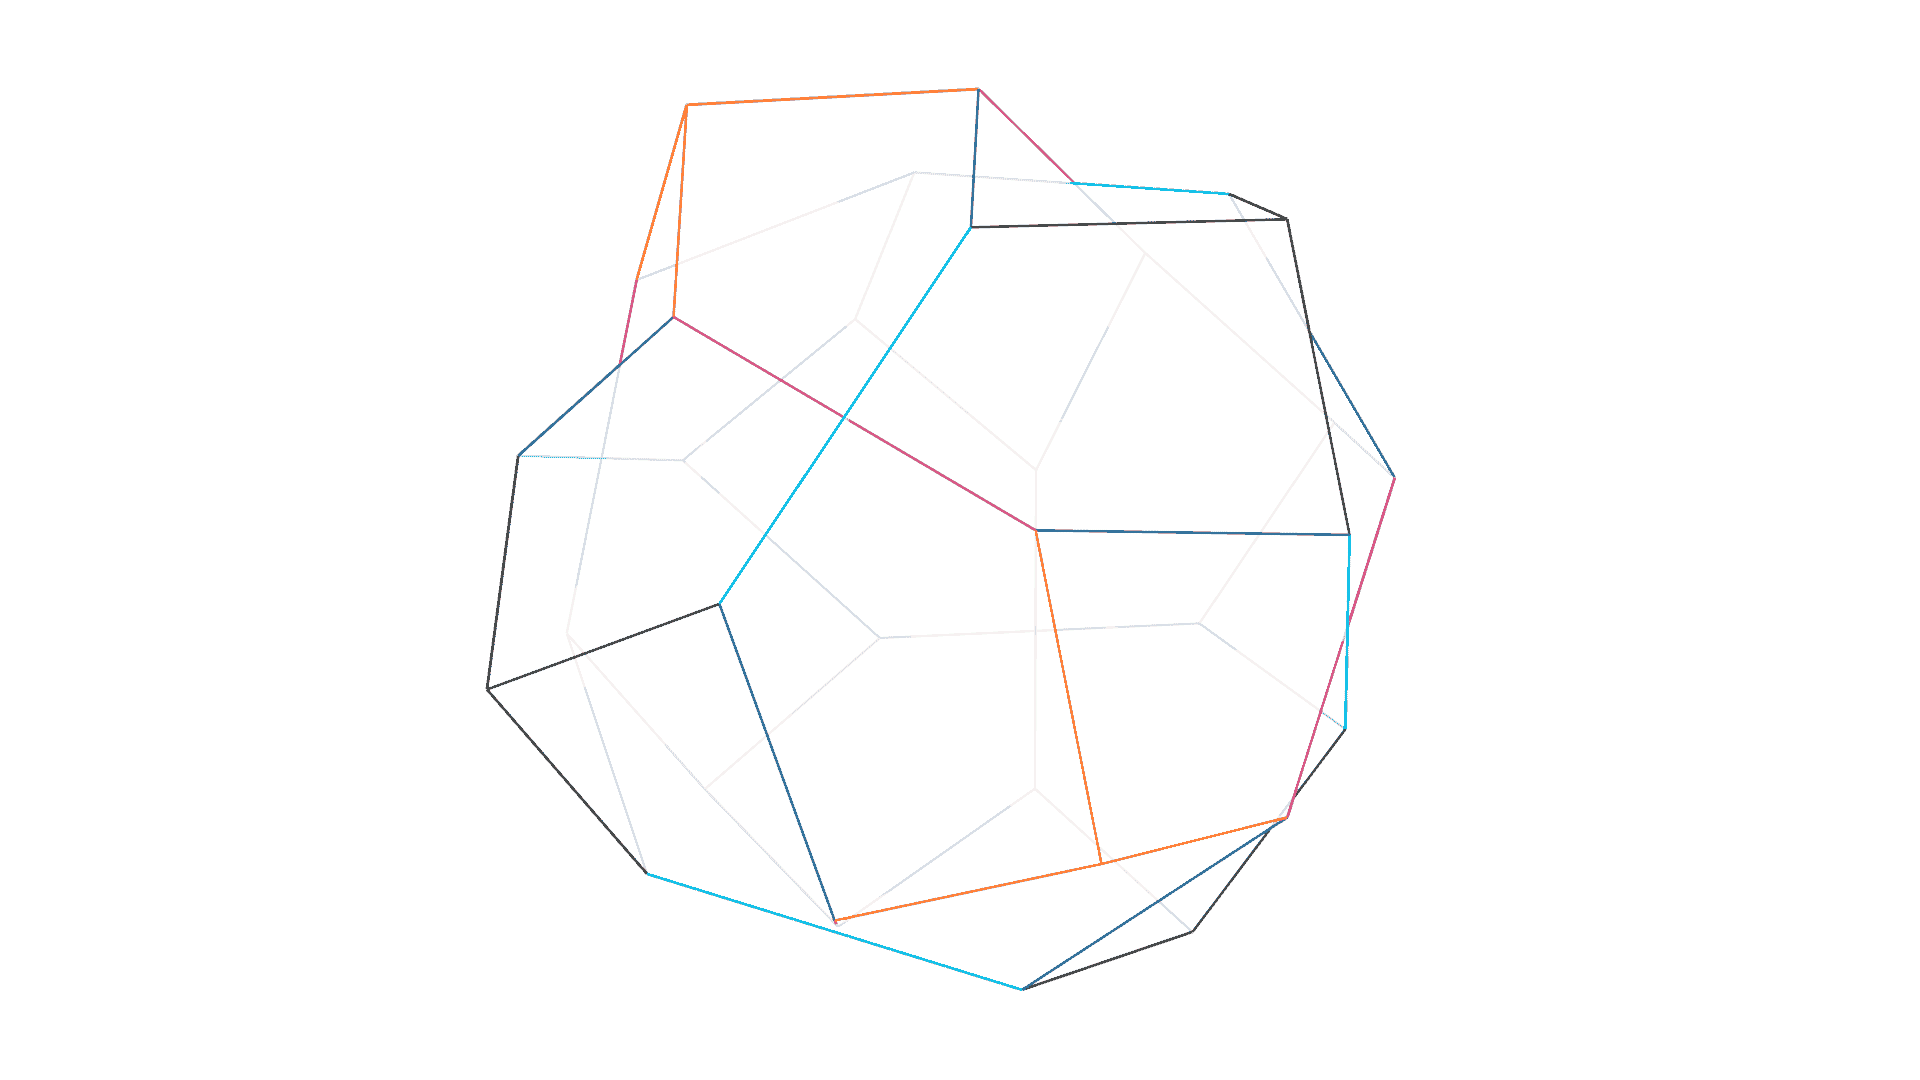 17481748_(t1-,t2-,t3-,t3-,t2+,t1+,t1+,f2)_chiral_tetrahedral_wrap_2.png